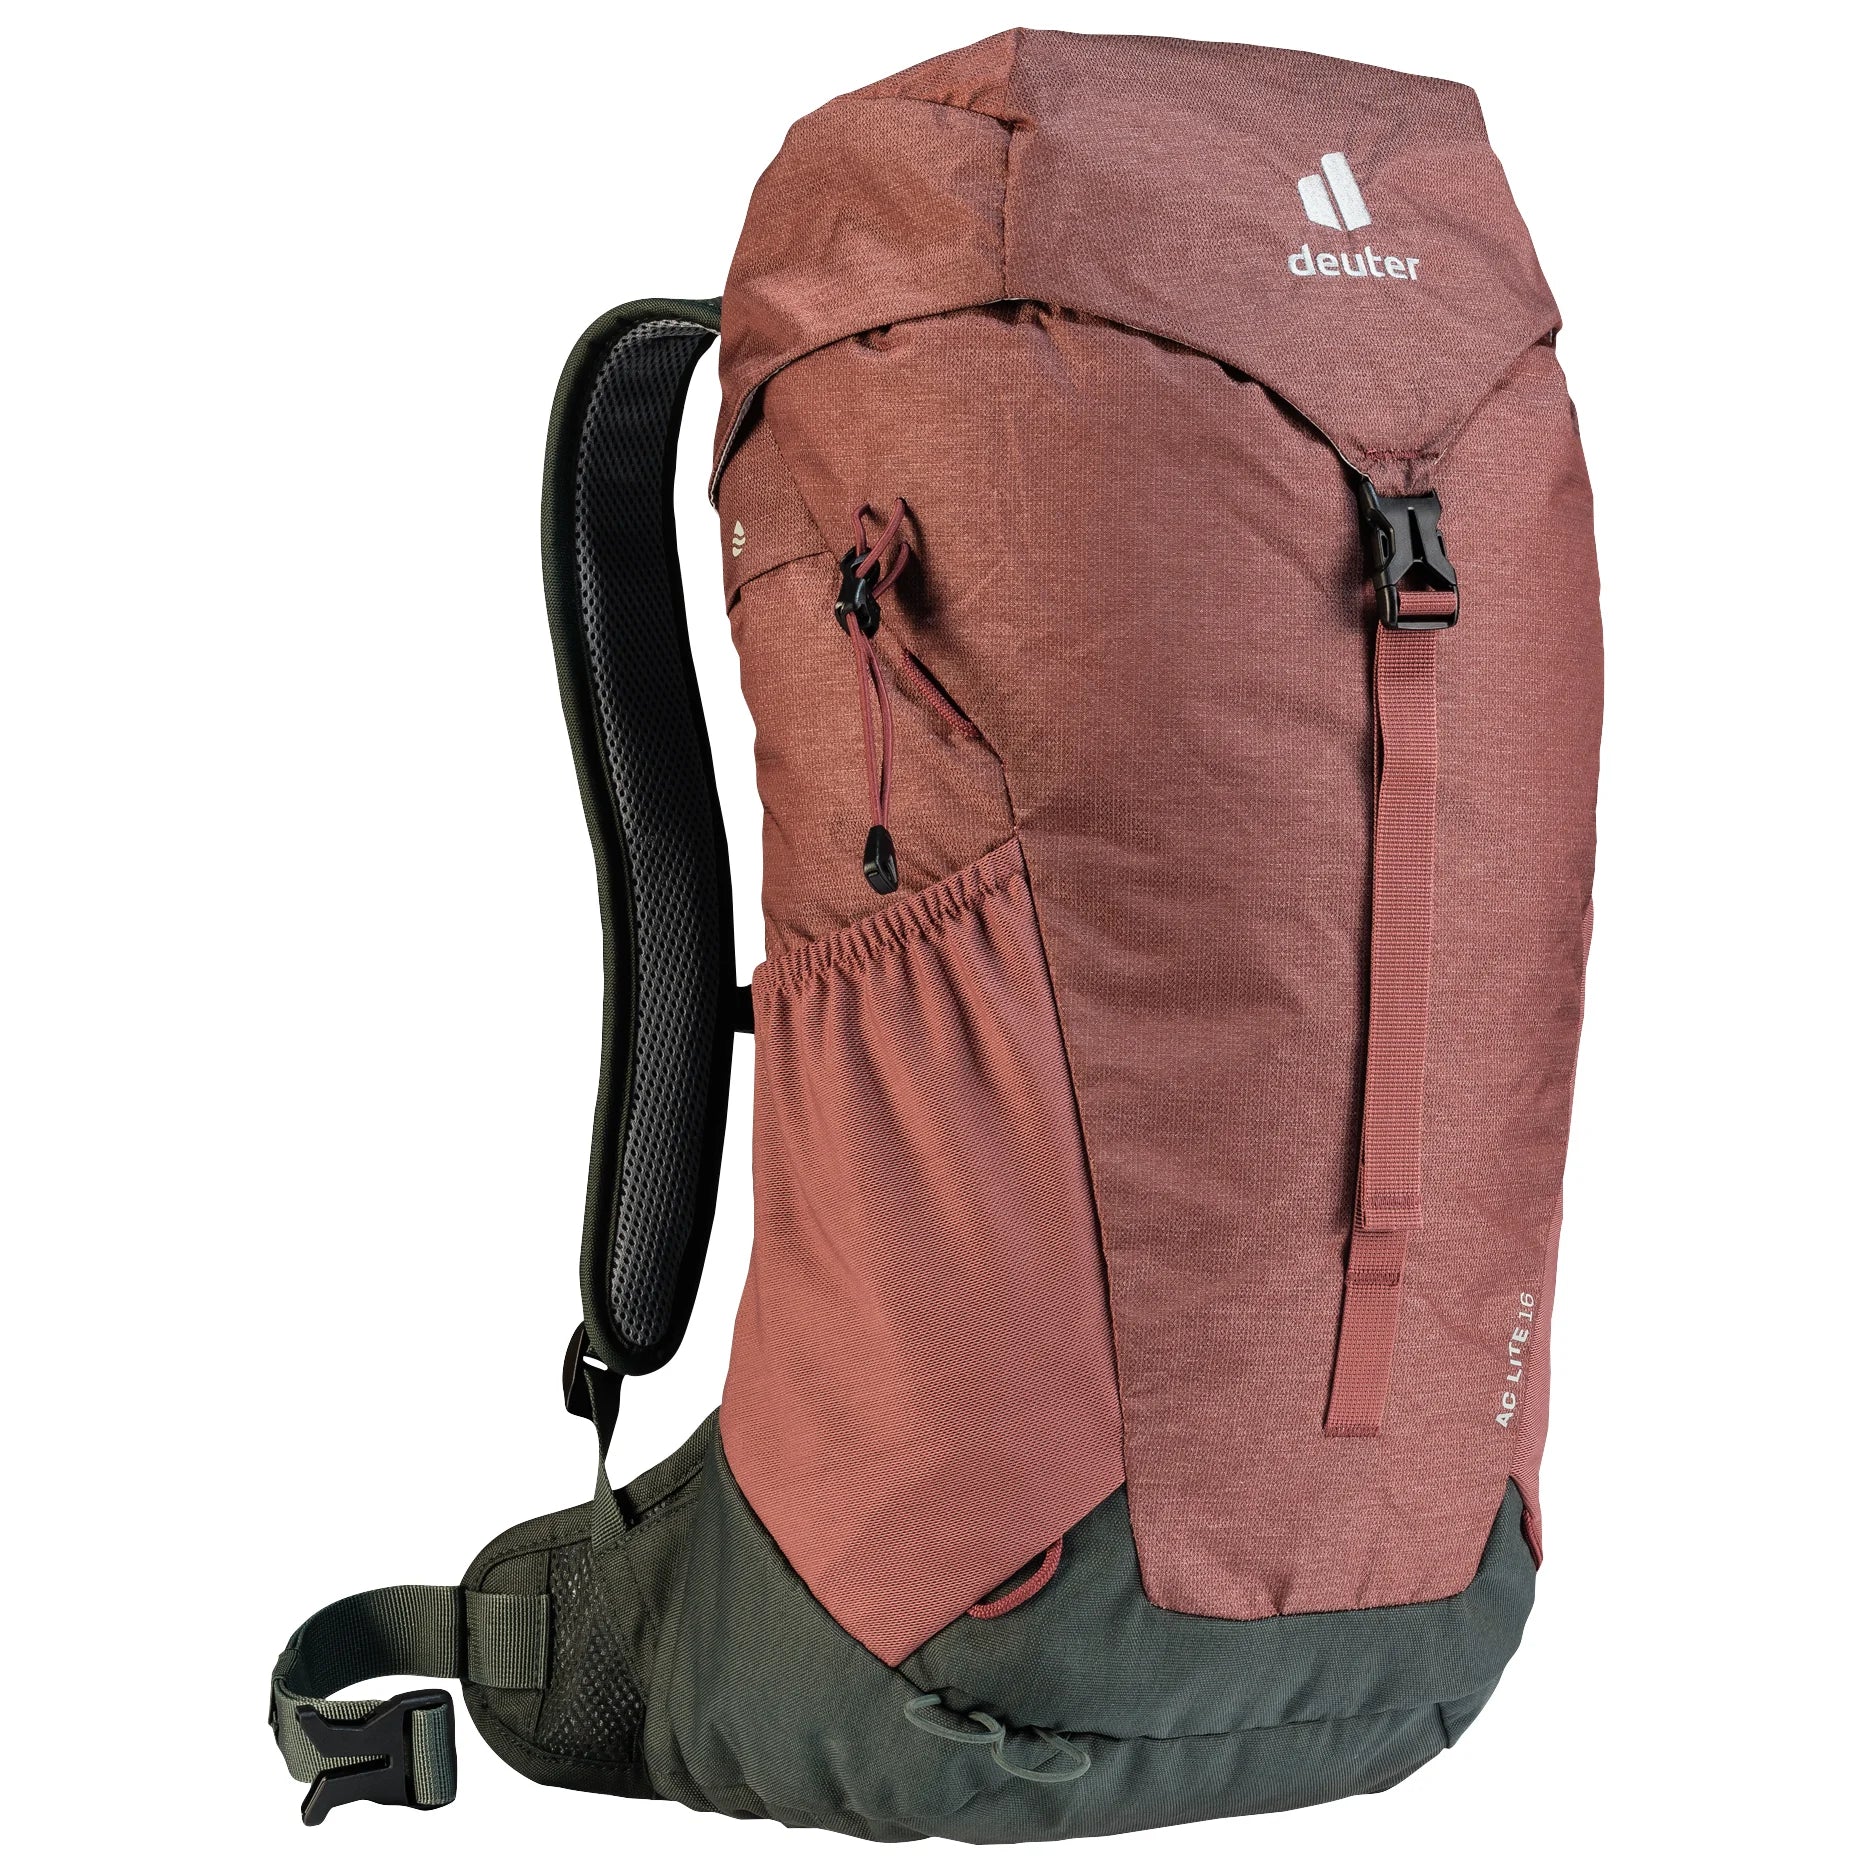 Deuter Travel AC Lite 16 hiking backpack 52 cm - black-graphite